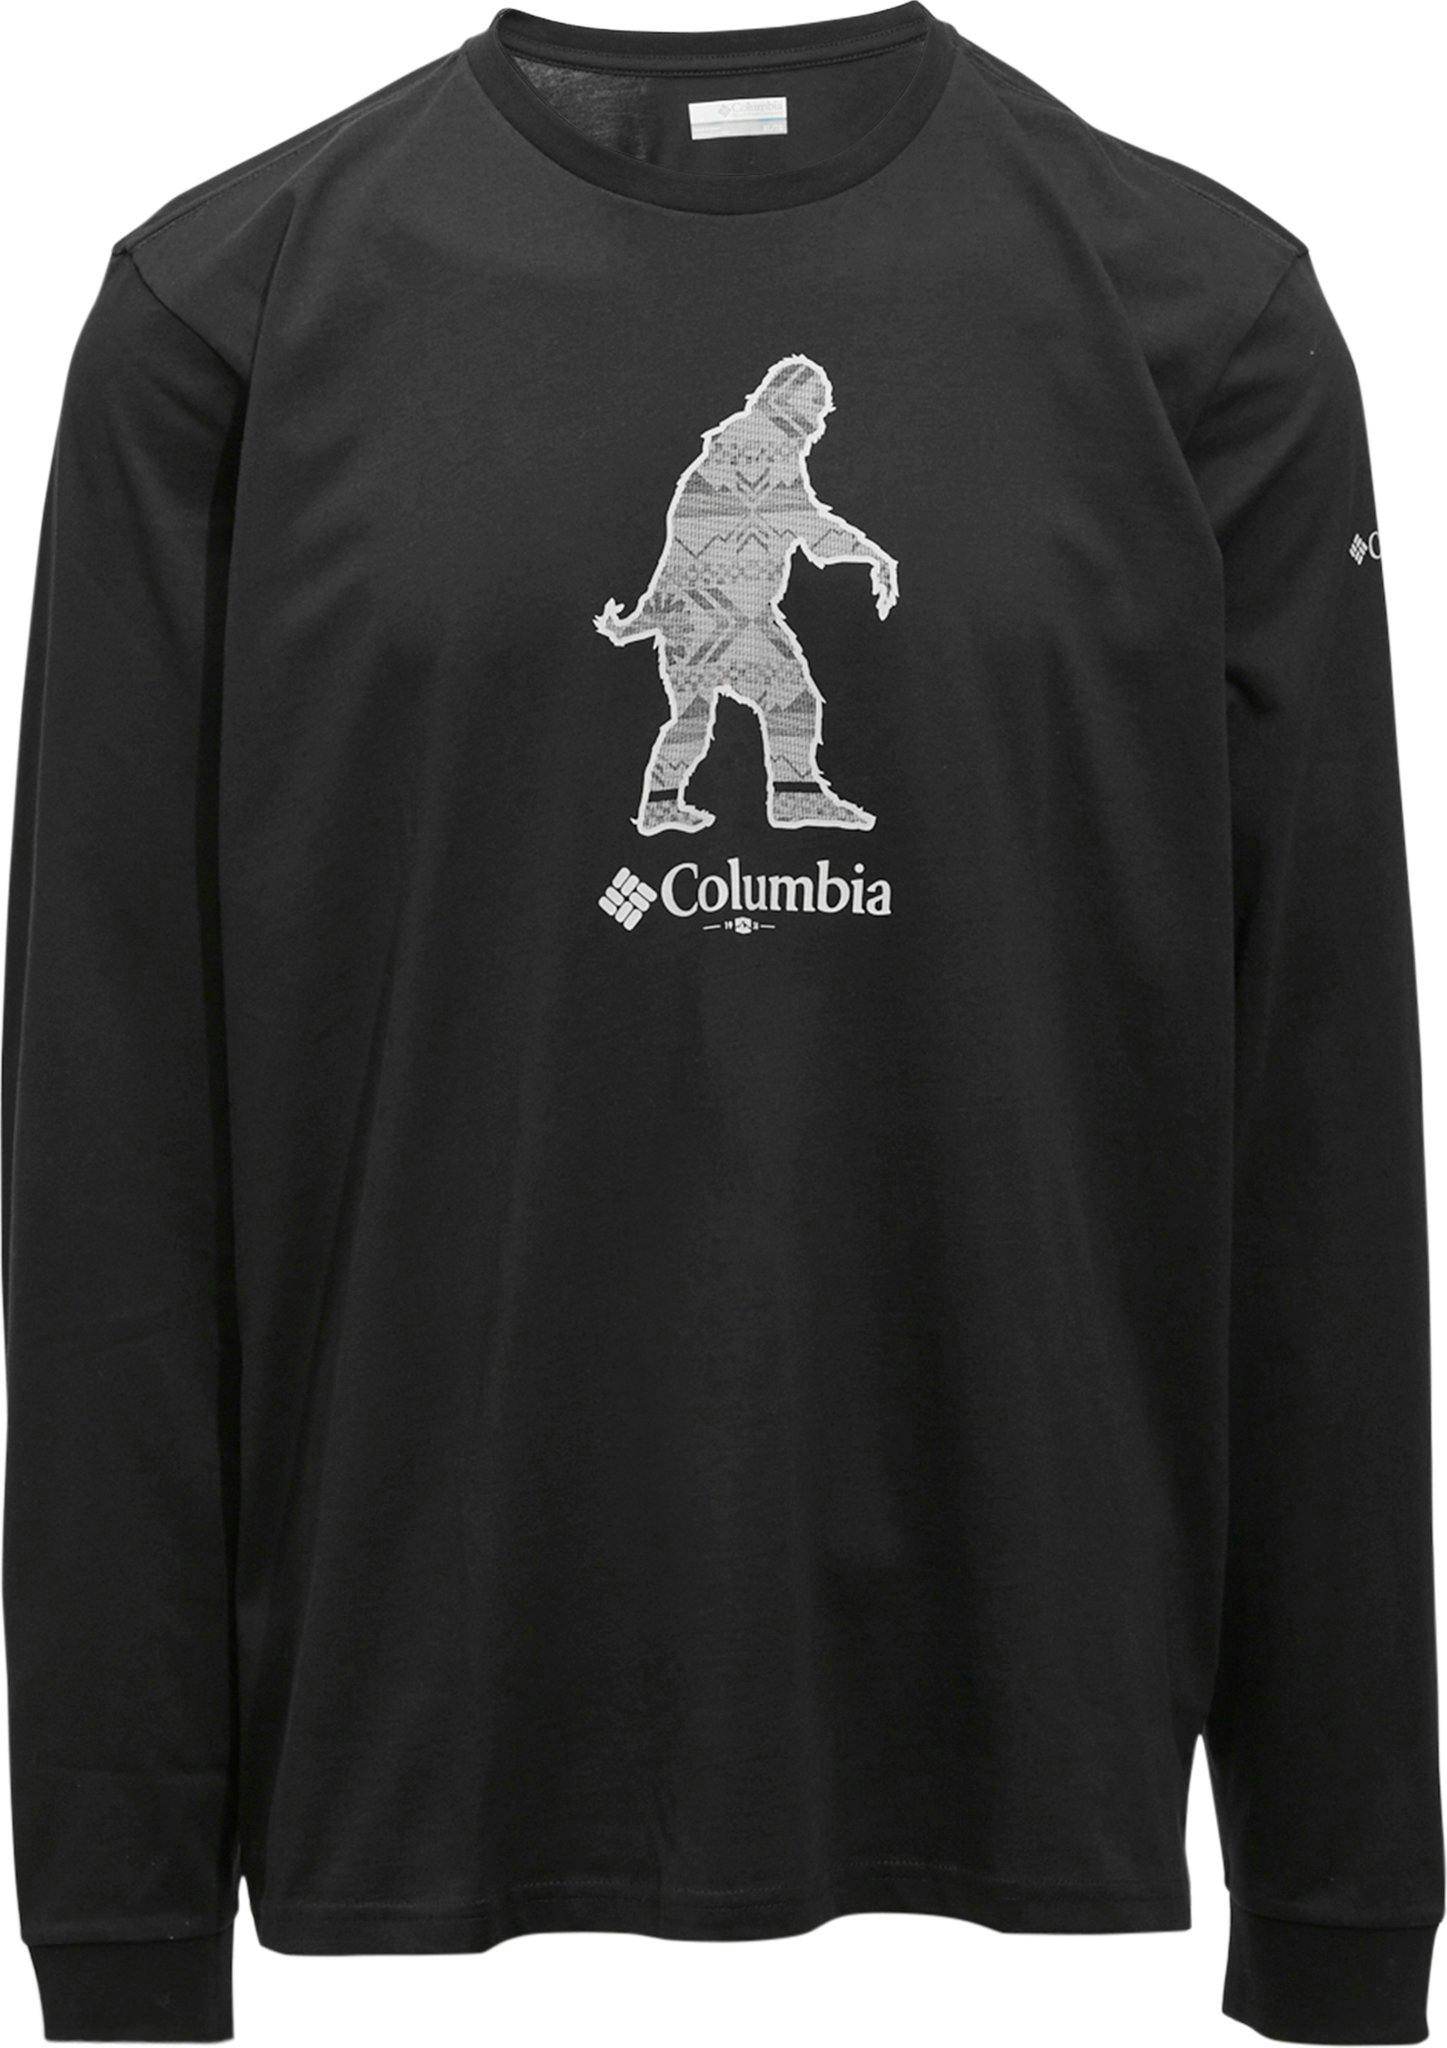 Product image for CSC Seasonal Logo Long Sleeve Organic Cotton T-Shirt - Men's